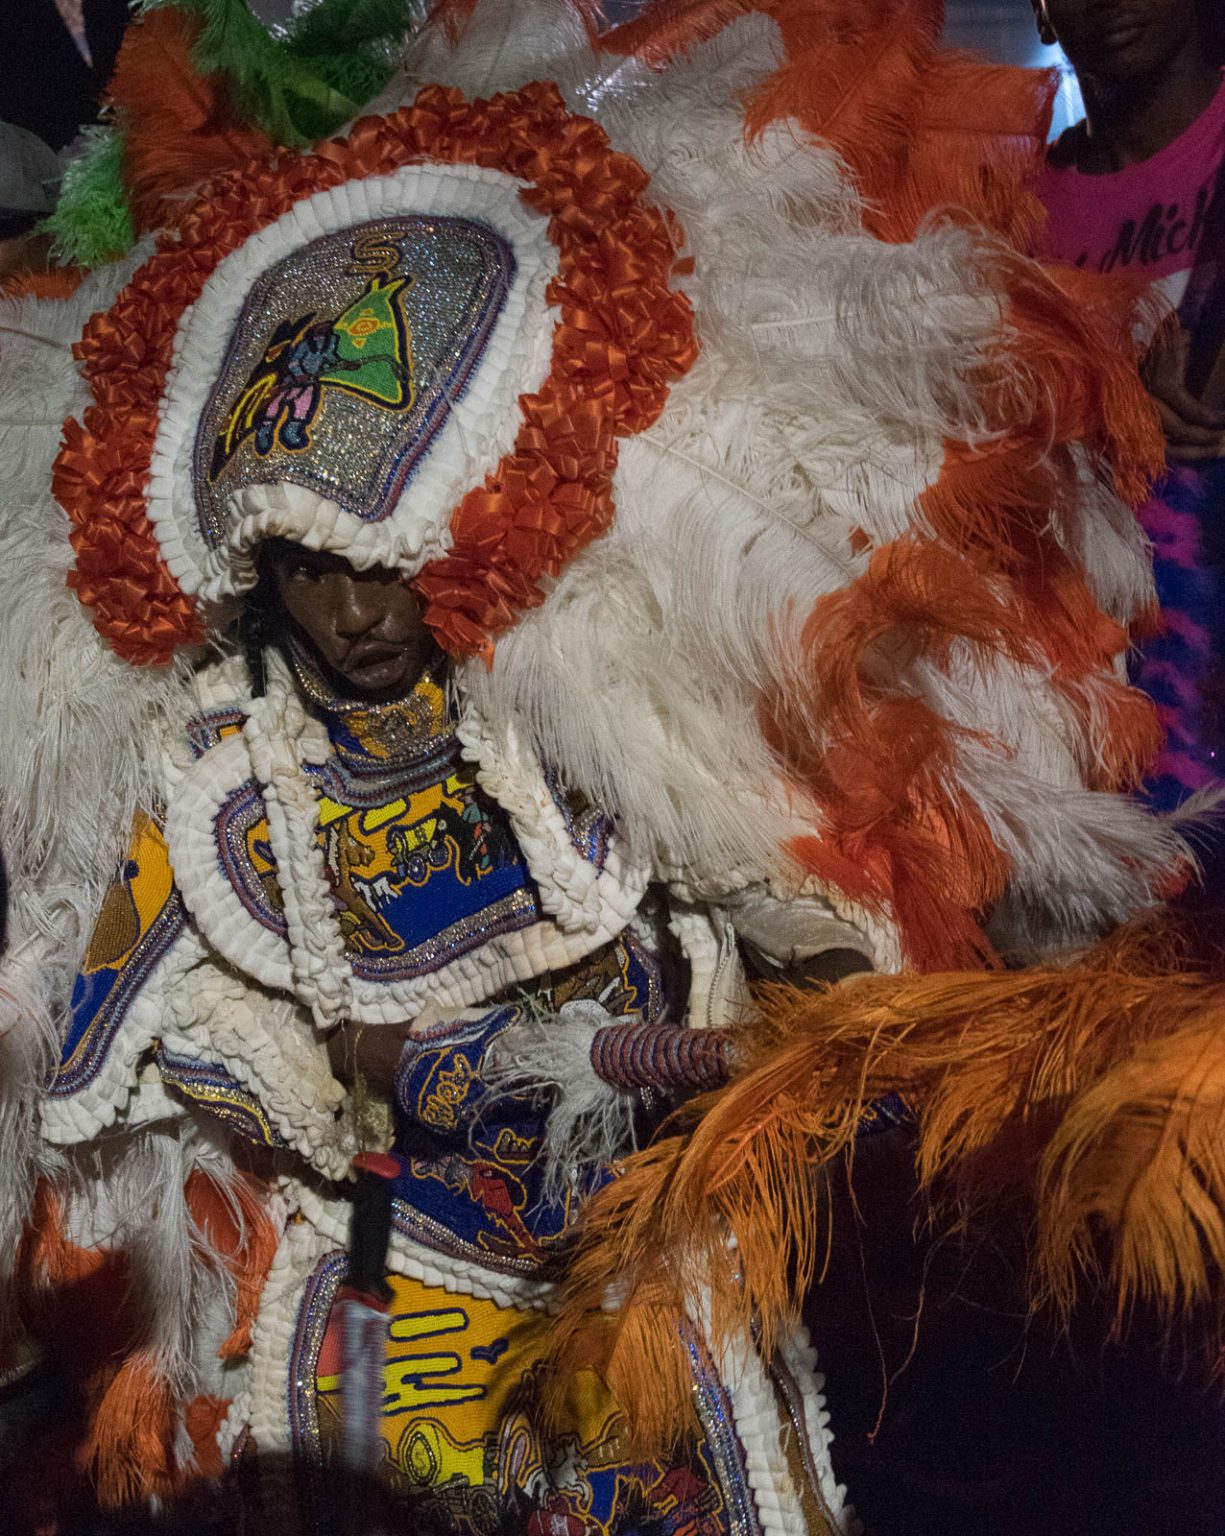 St. Joseph Night Mardi Gras Indians